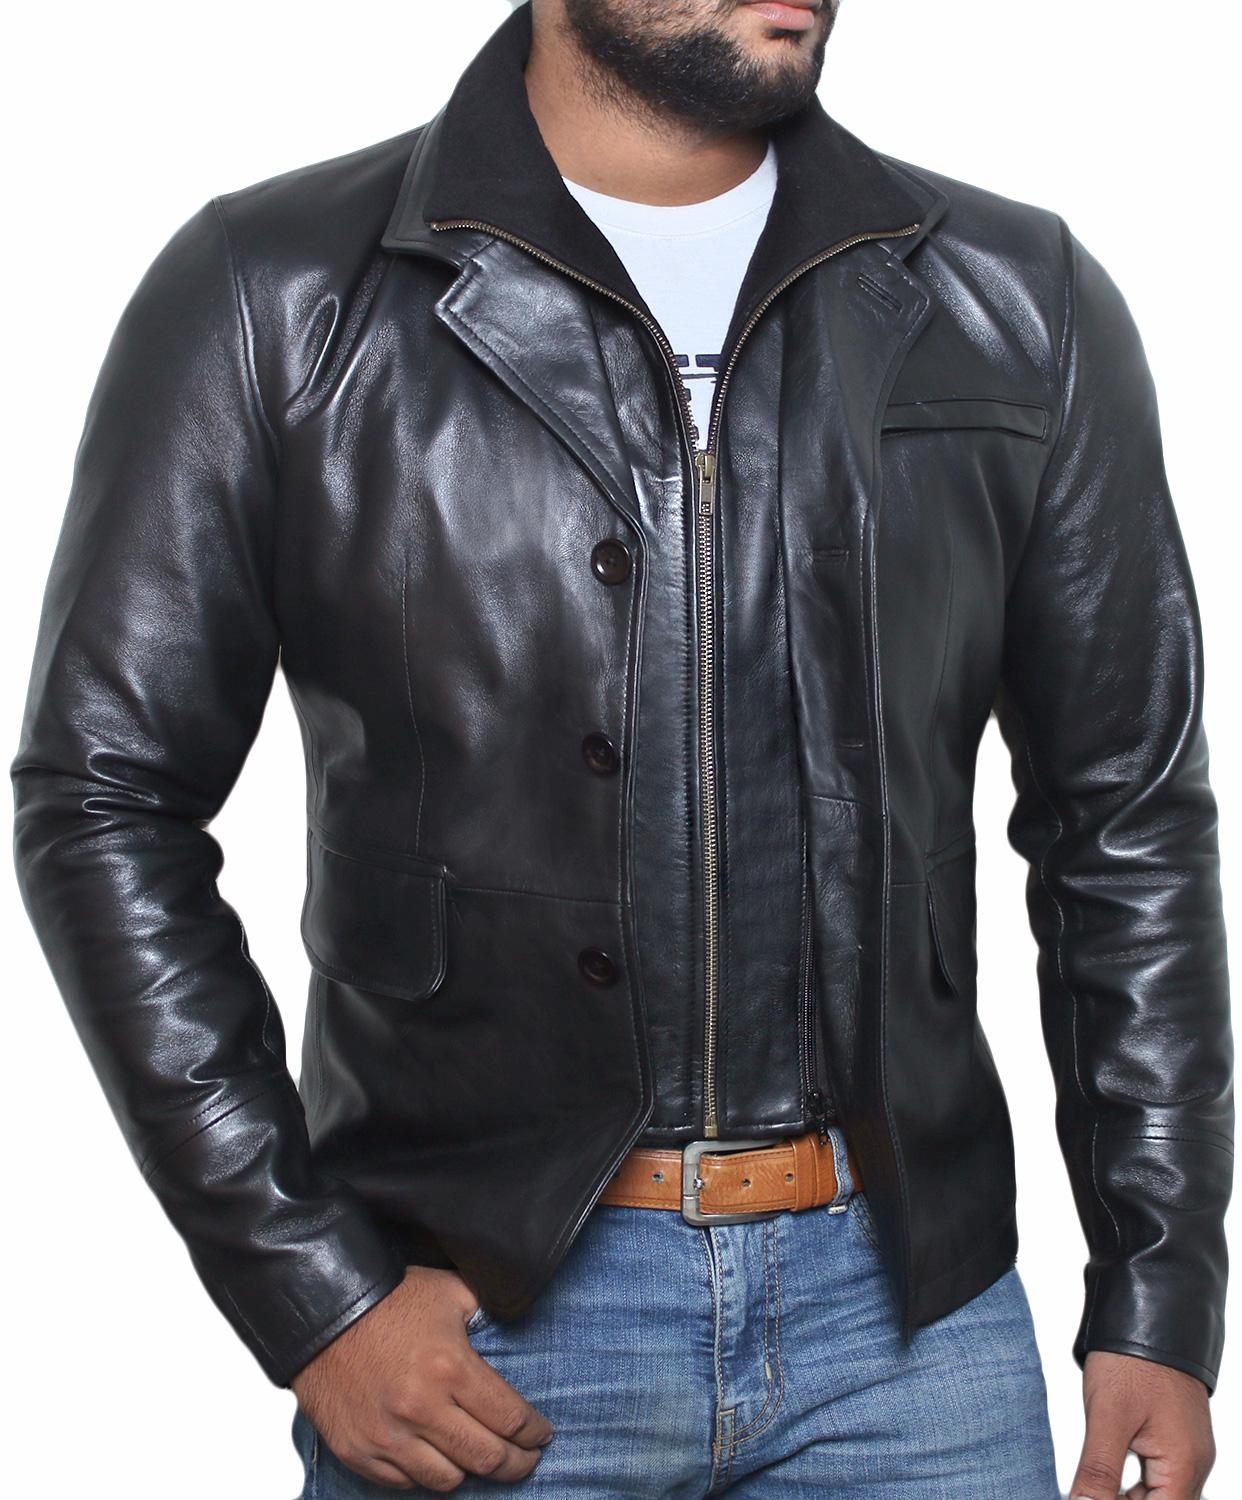 Laverapelle Mens Black Genuine Lambskin Leather Jacket - 1501641 | eBay